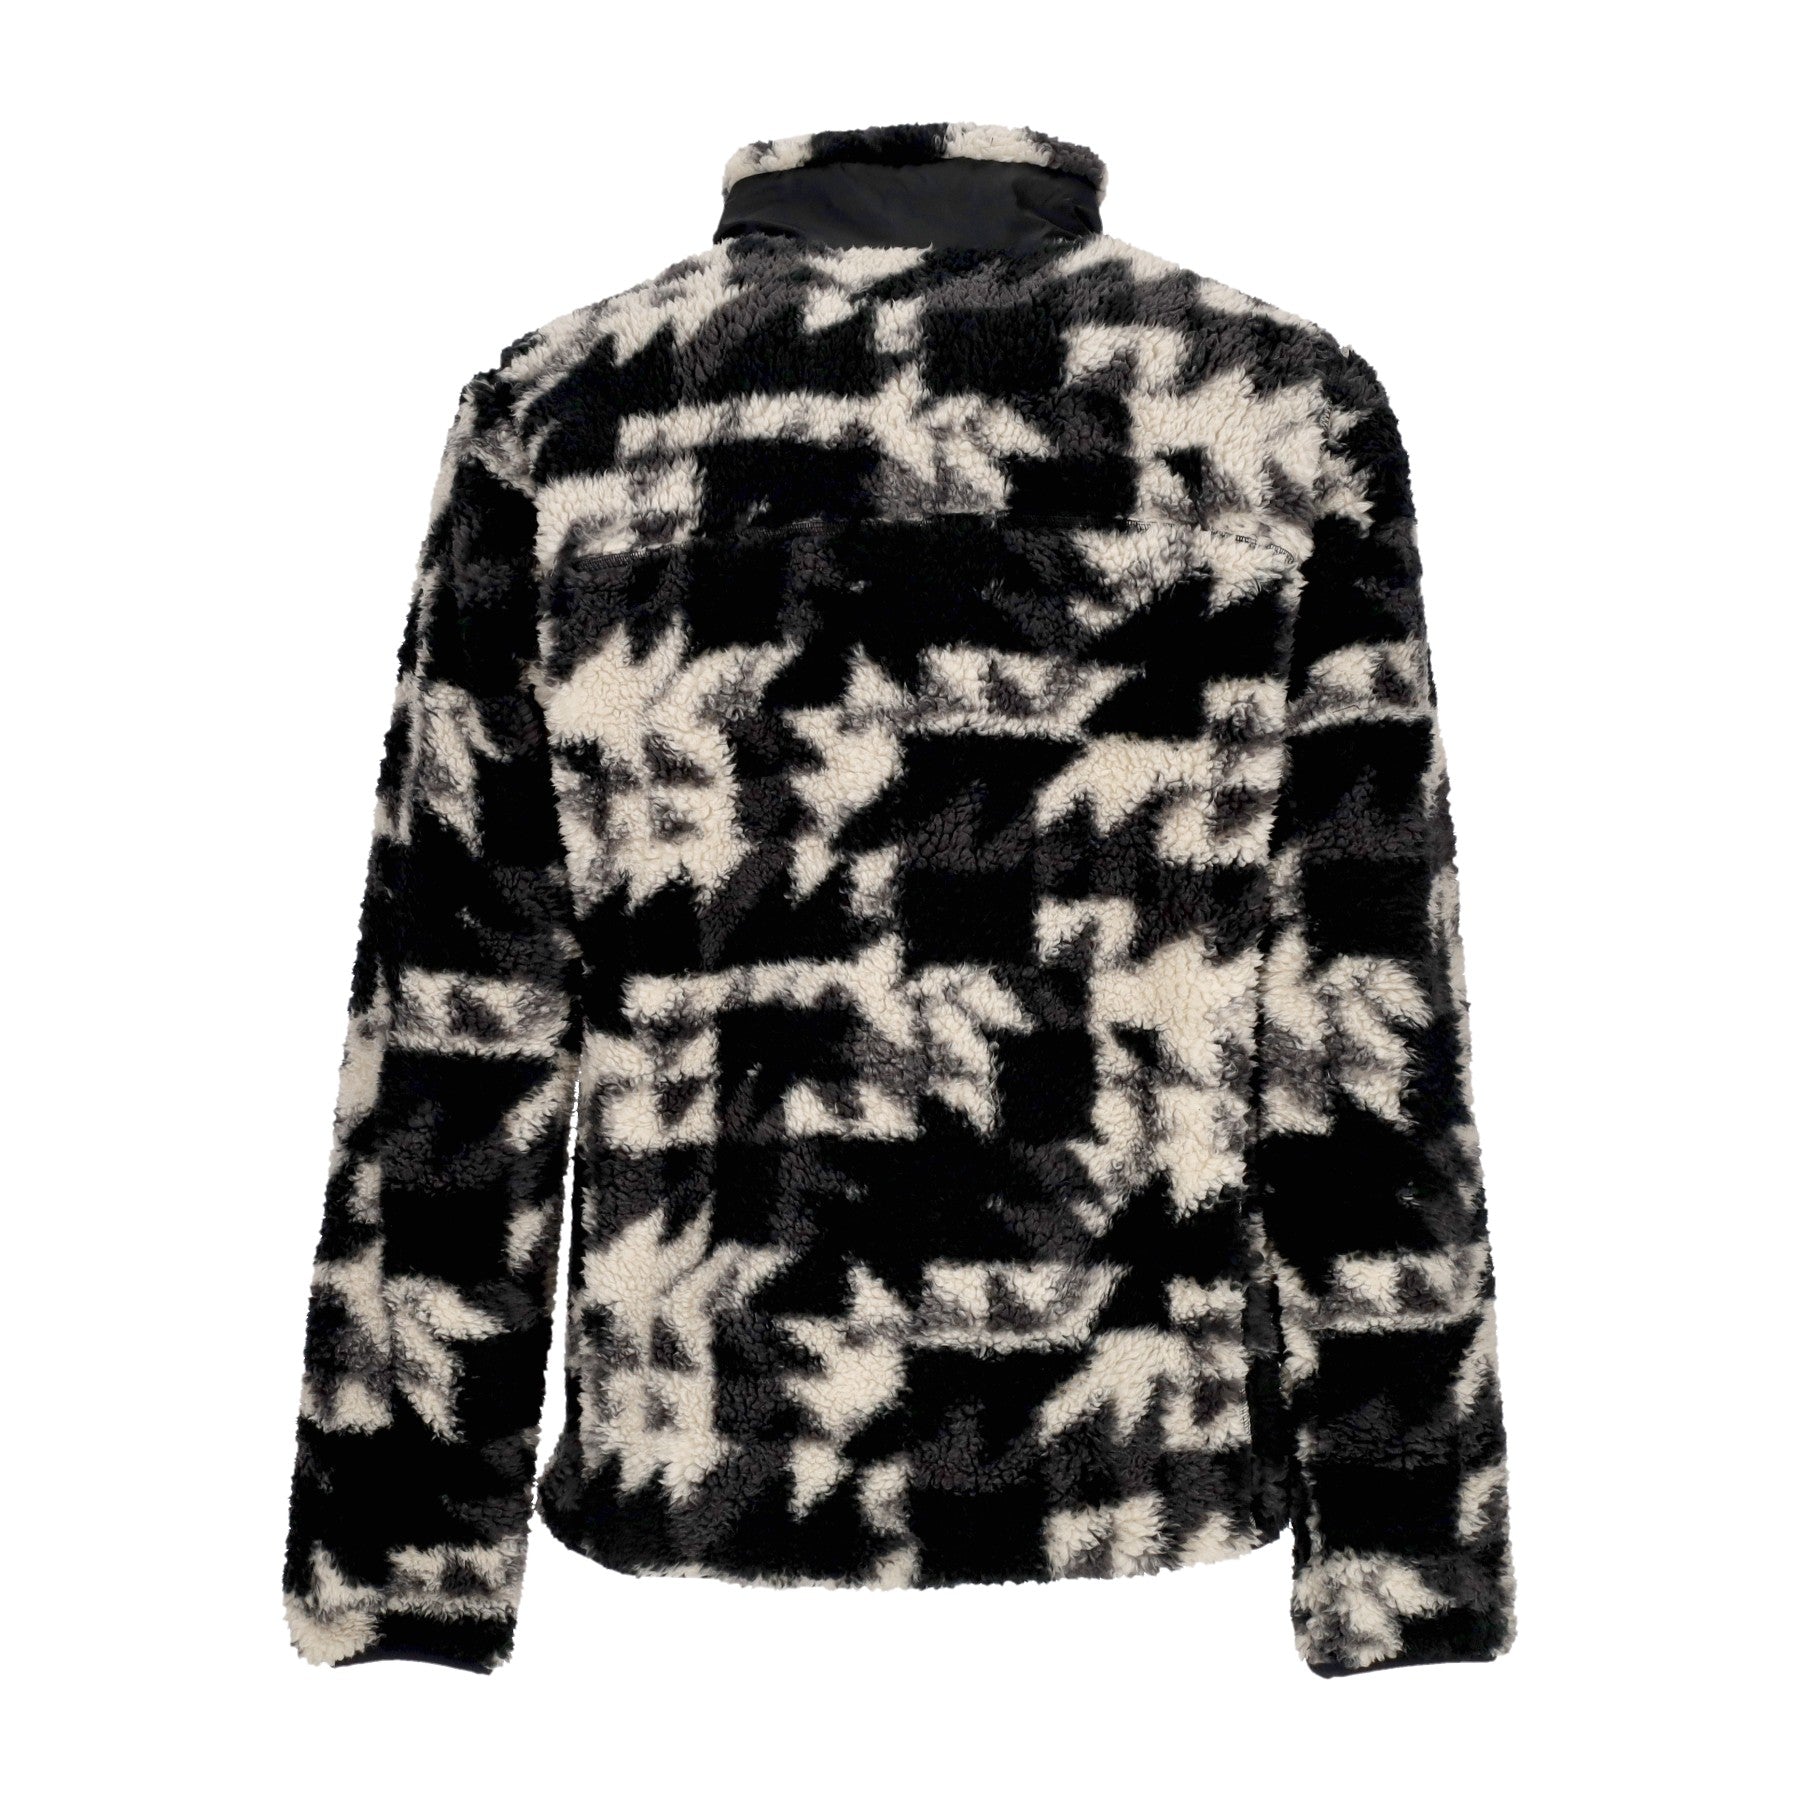 Columbia, Orsetto Uomo Winter Pass Print Fleece Full Zip, Black Quilted